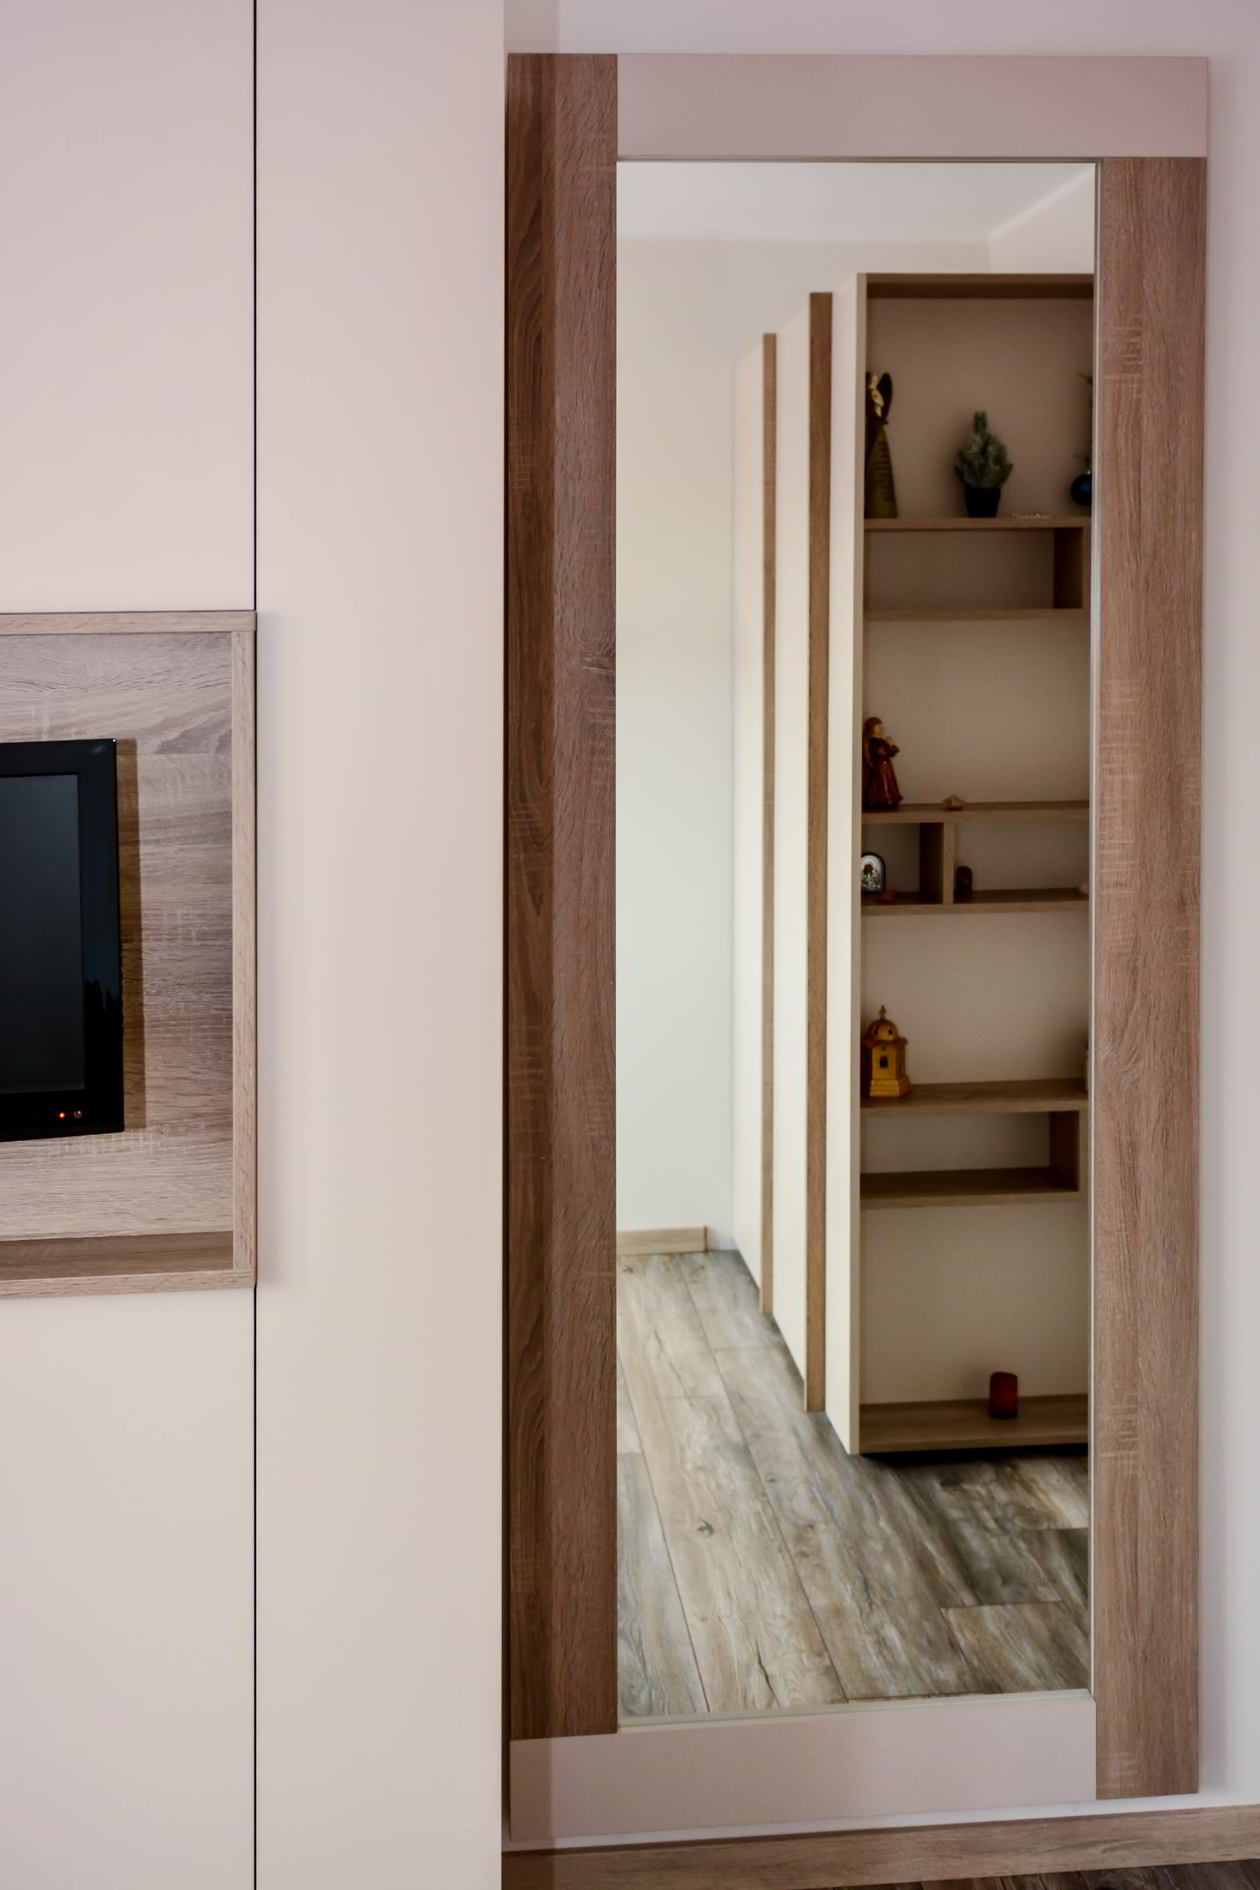 Proiect mobila Dormitor oaspeti, cu dulap, dulap cu TV incadrat, 12m², realizat 17 Februarie 2017 COD.5280